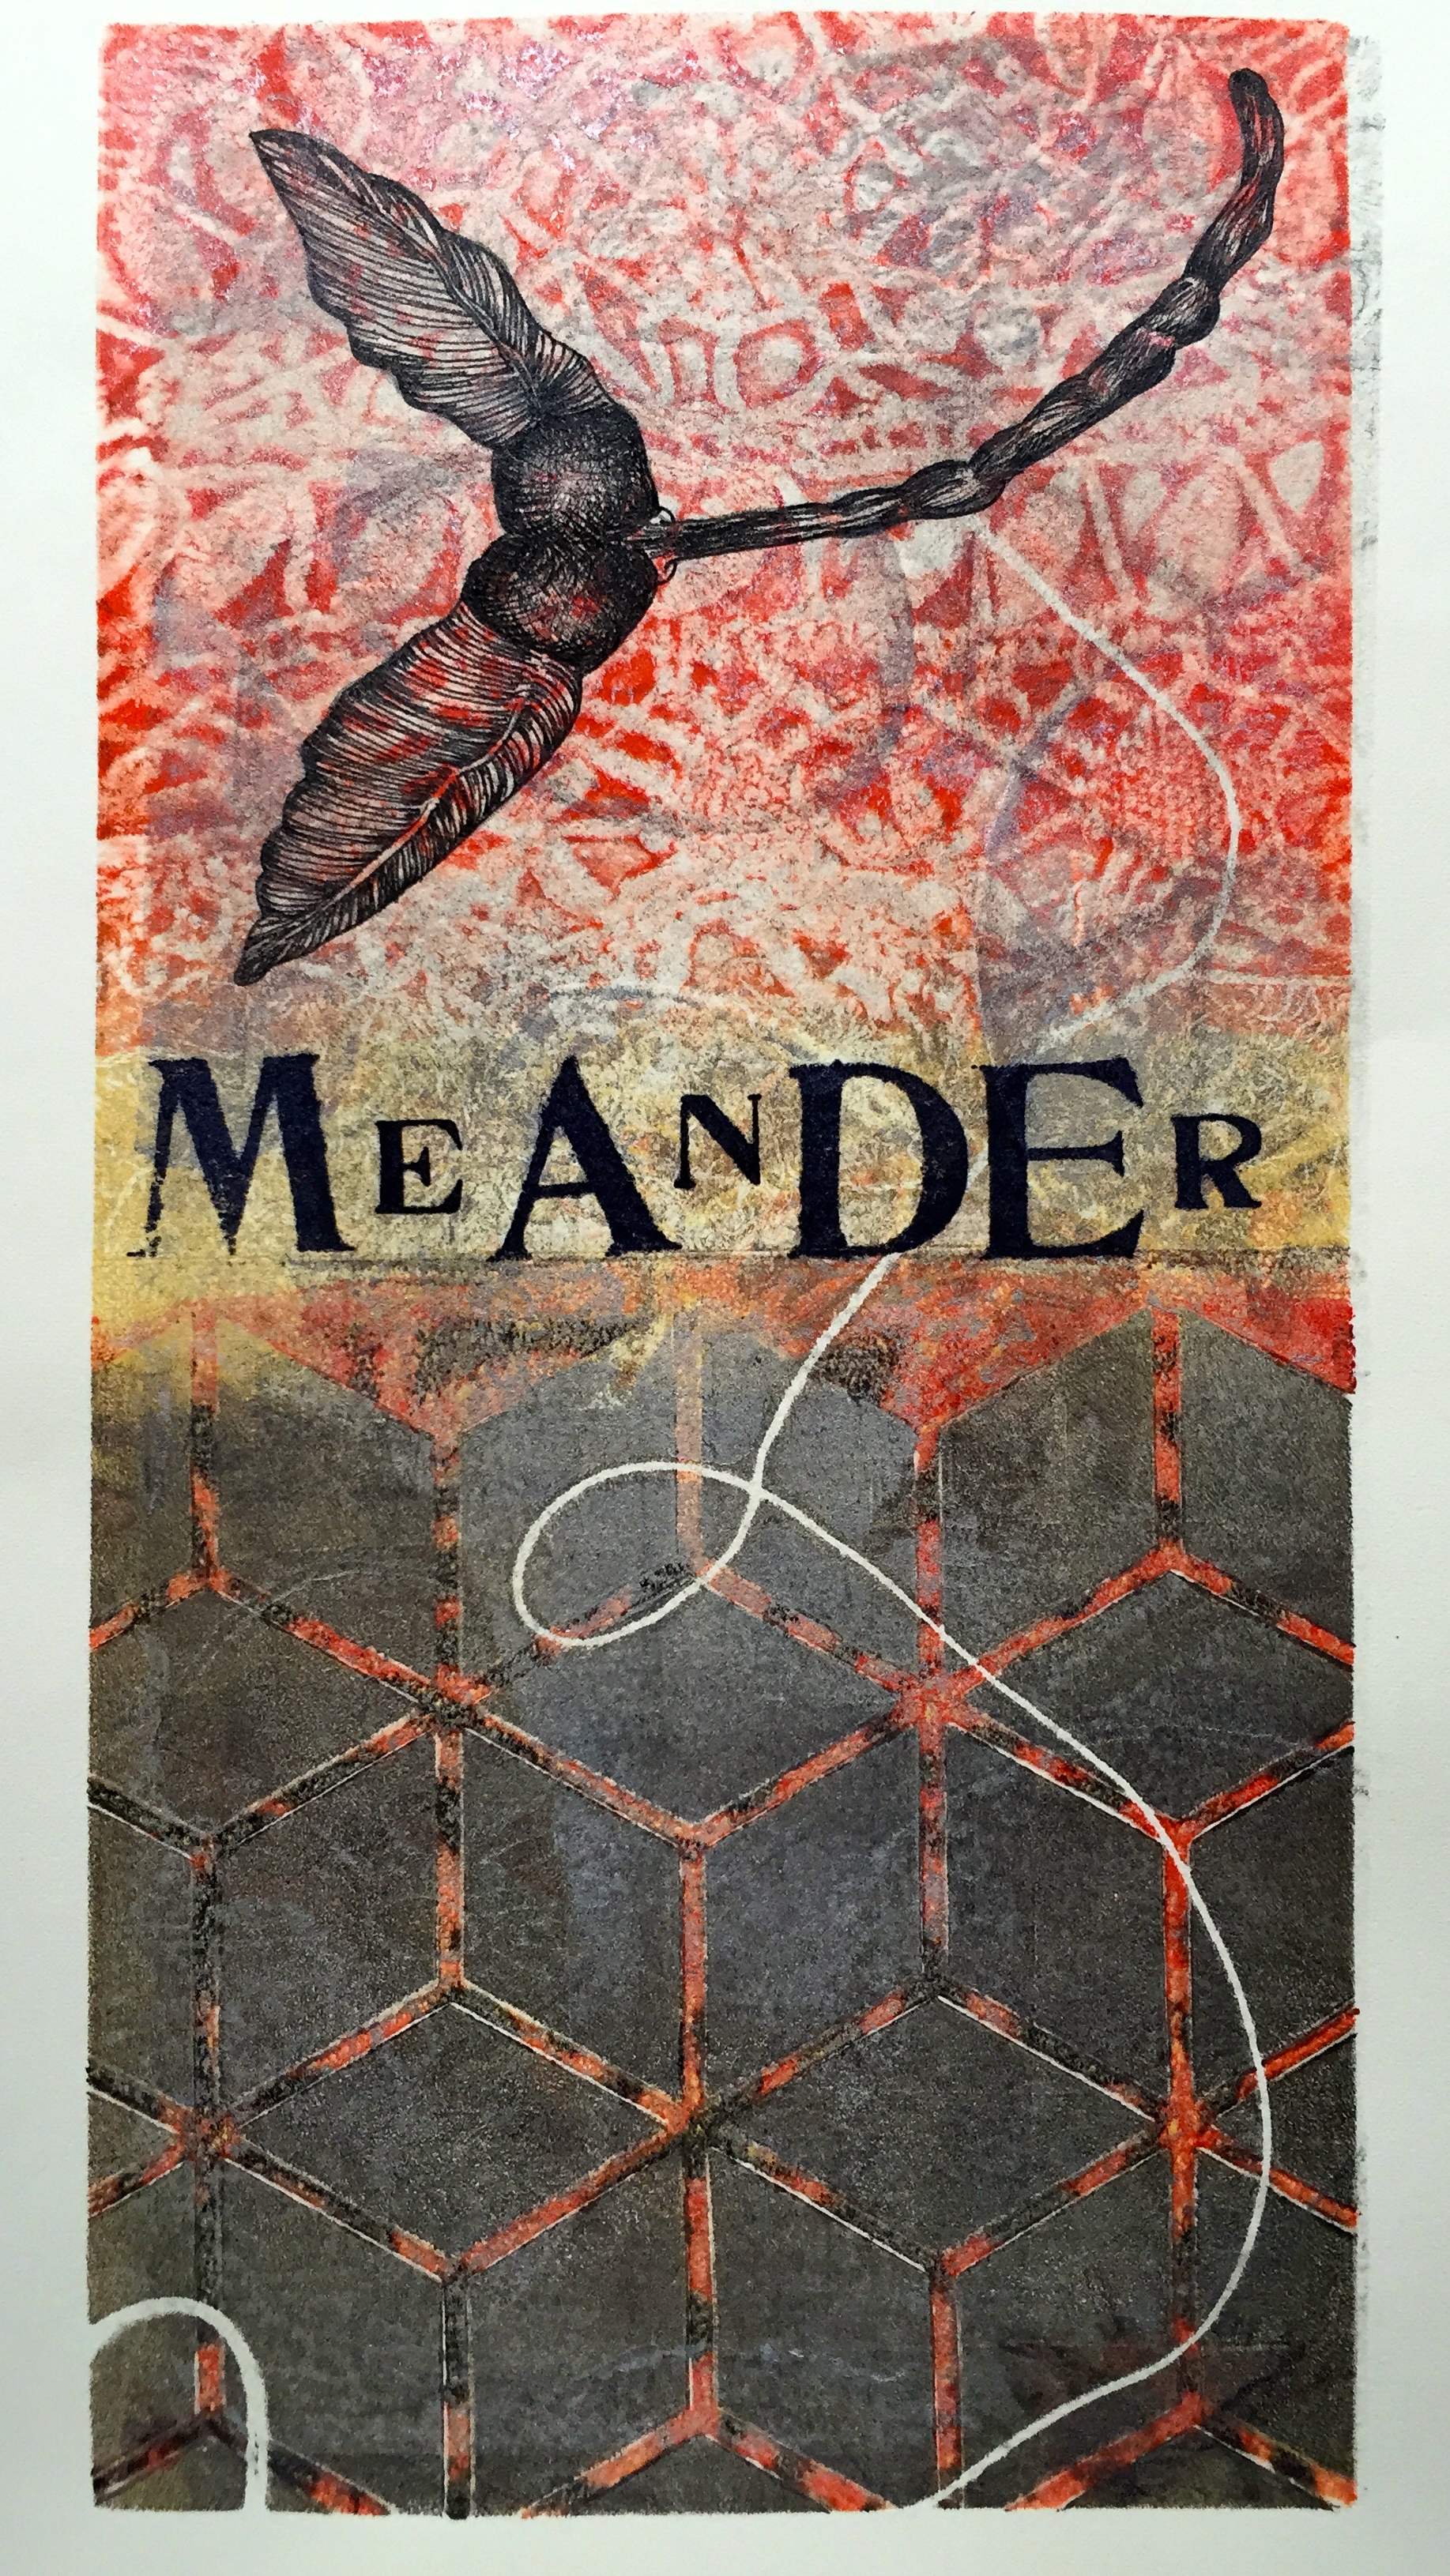   Meander   6 x 12 inches  mixed media  image: Susan Webster  stamped text:Stuart Kestenbaum  2015 